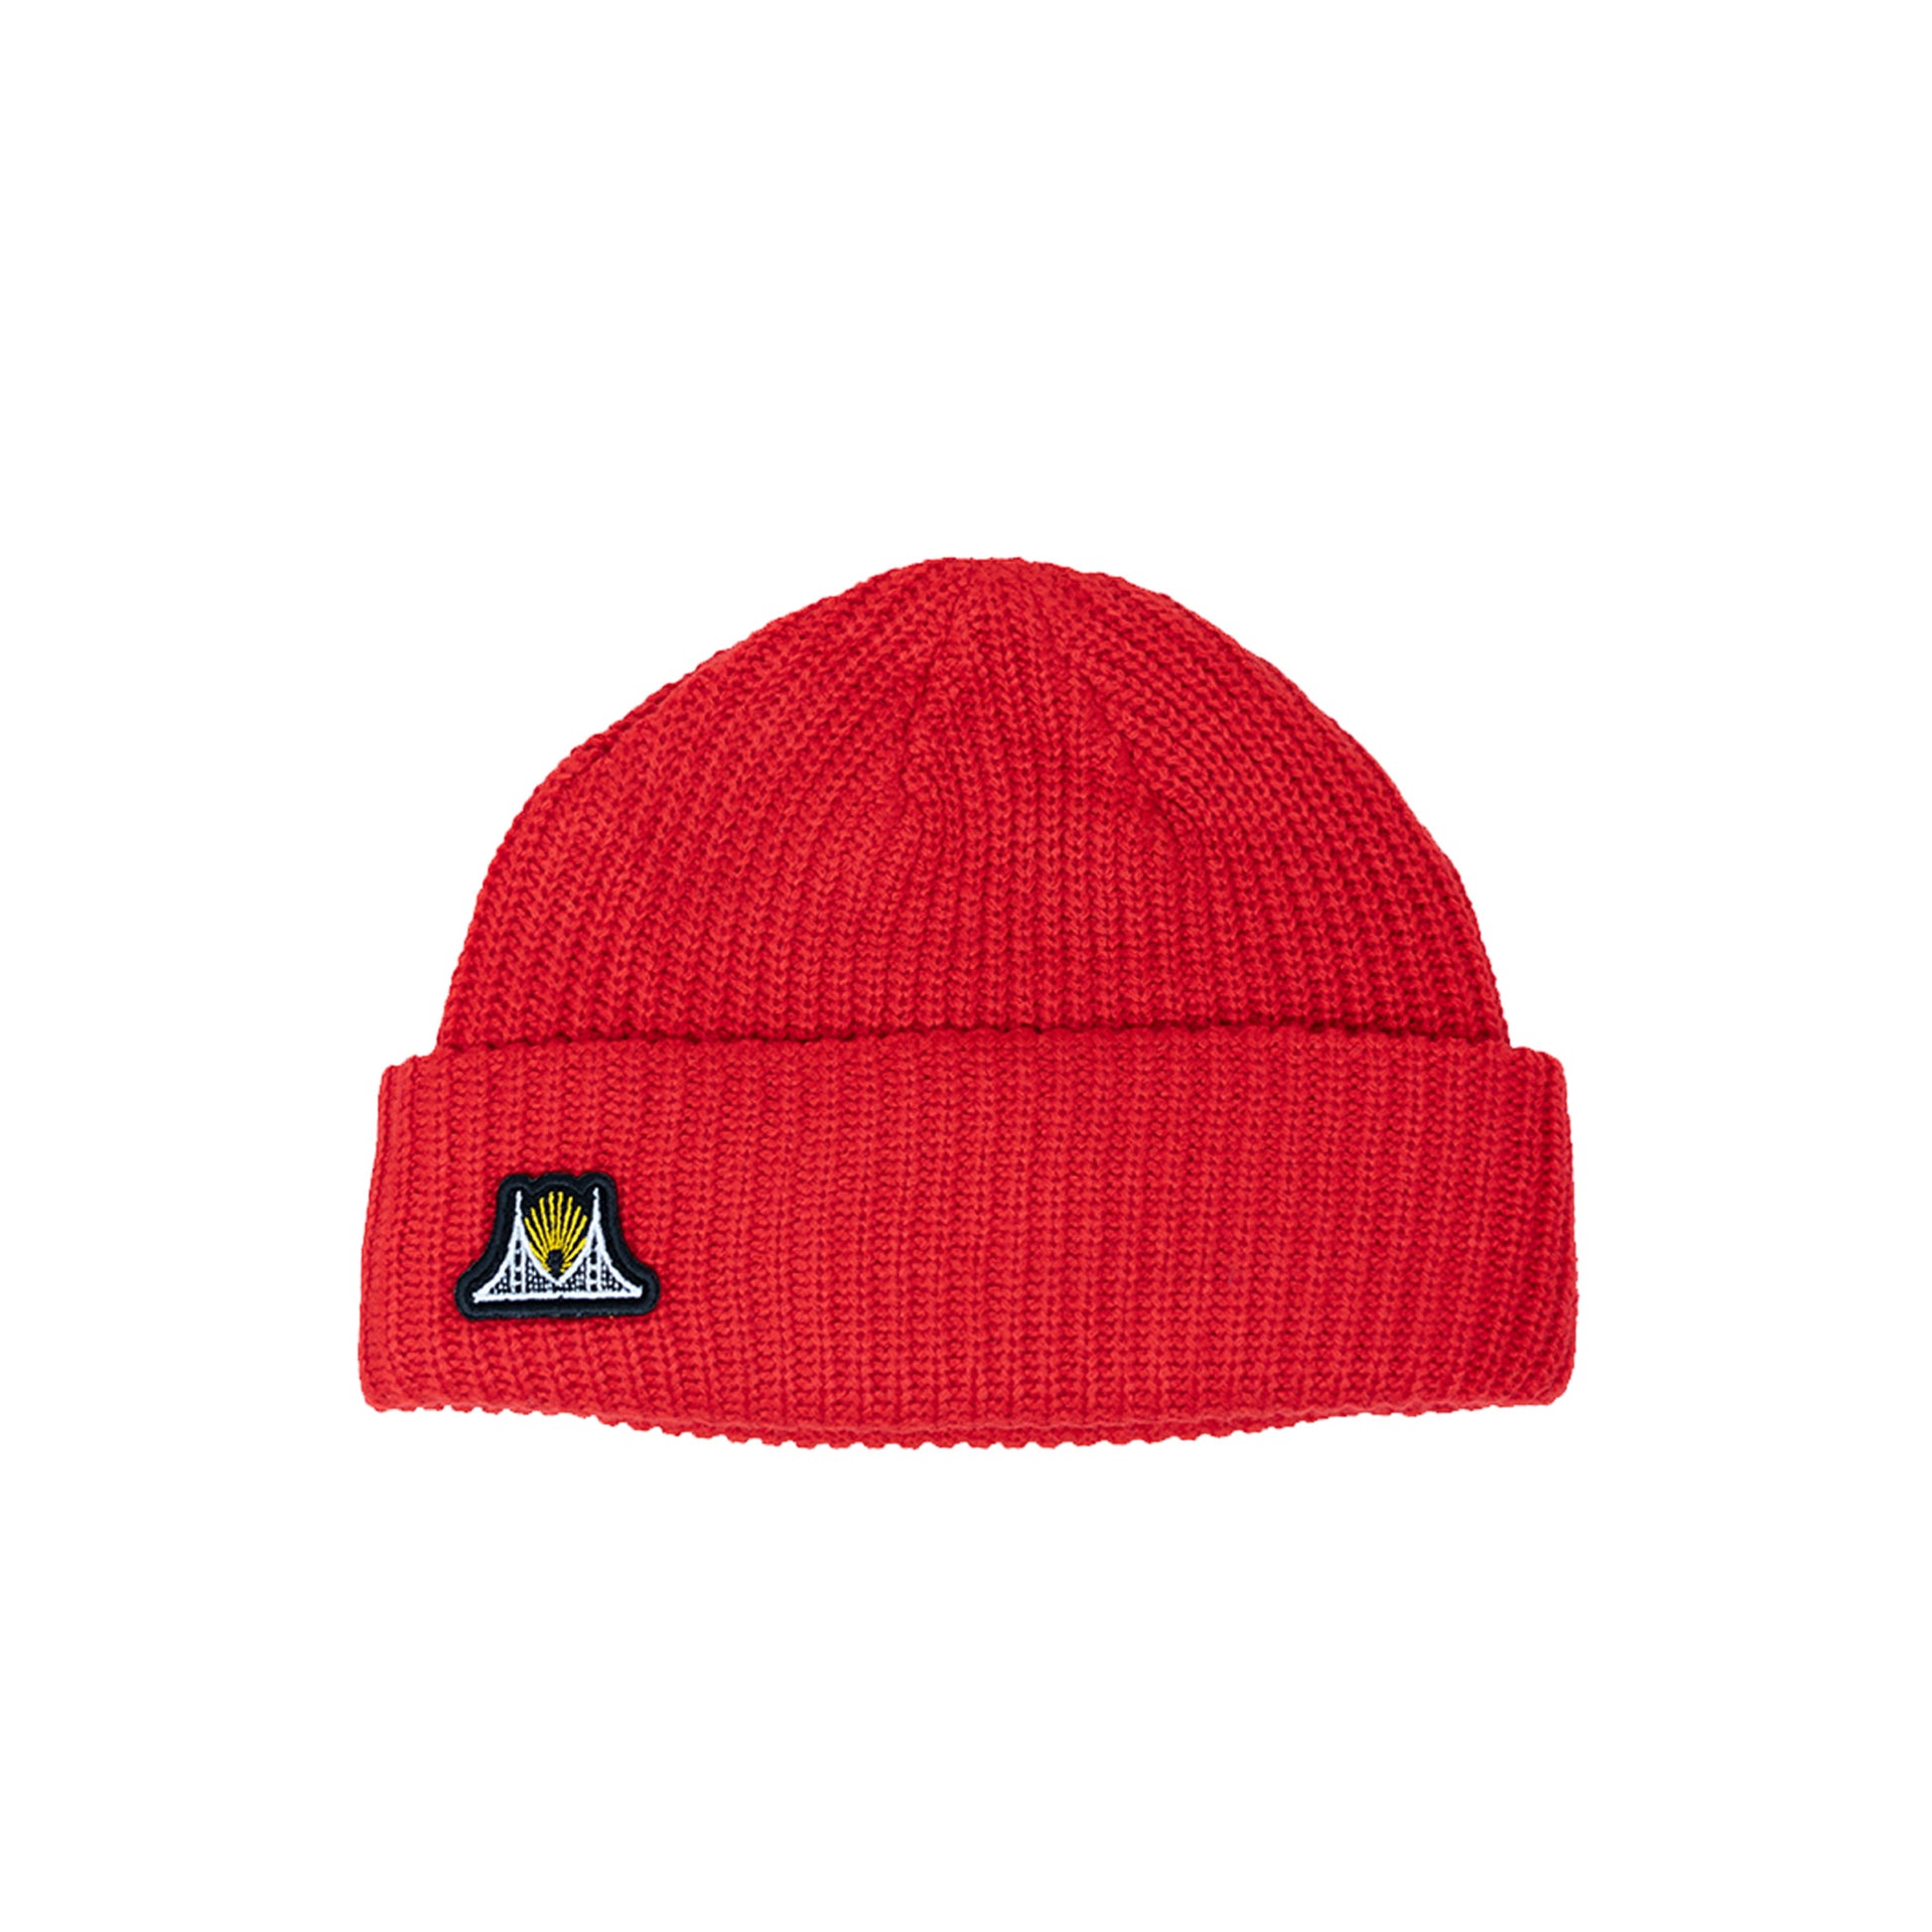 Red skullcap beanie  with bay bridge logo